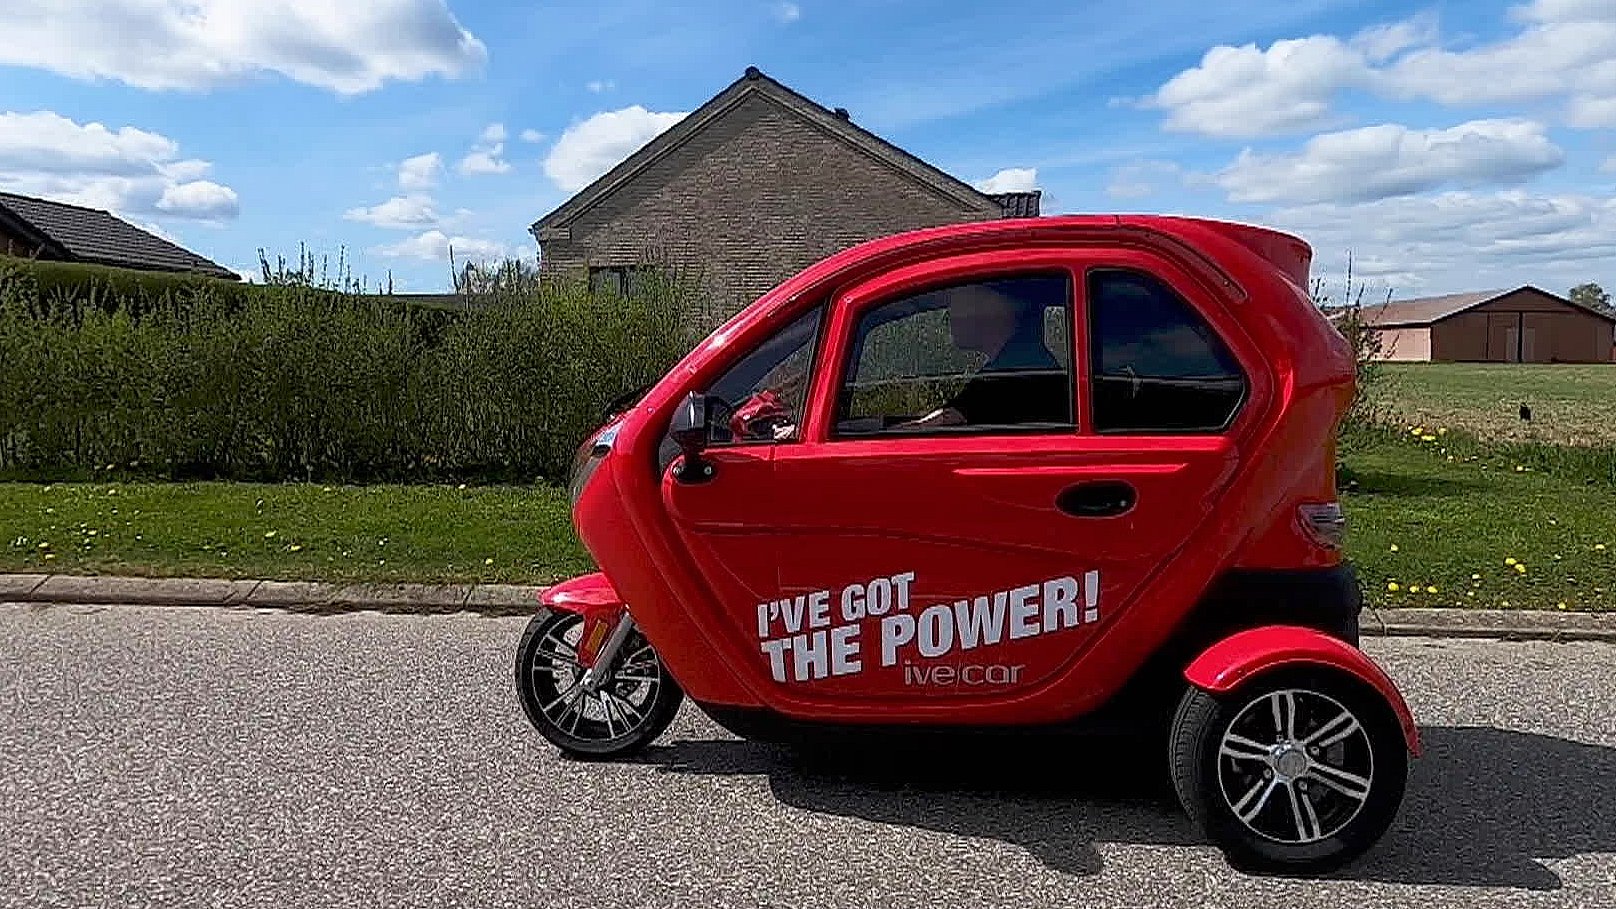 Shetland Konserveringsmiddel thespian Lille trehjulet scooter er blevet et hit på vejene | TV2 Østjylland